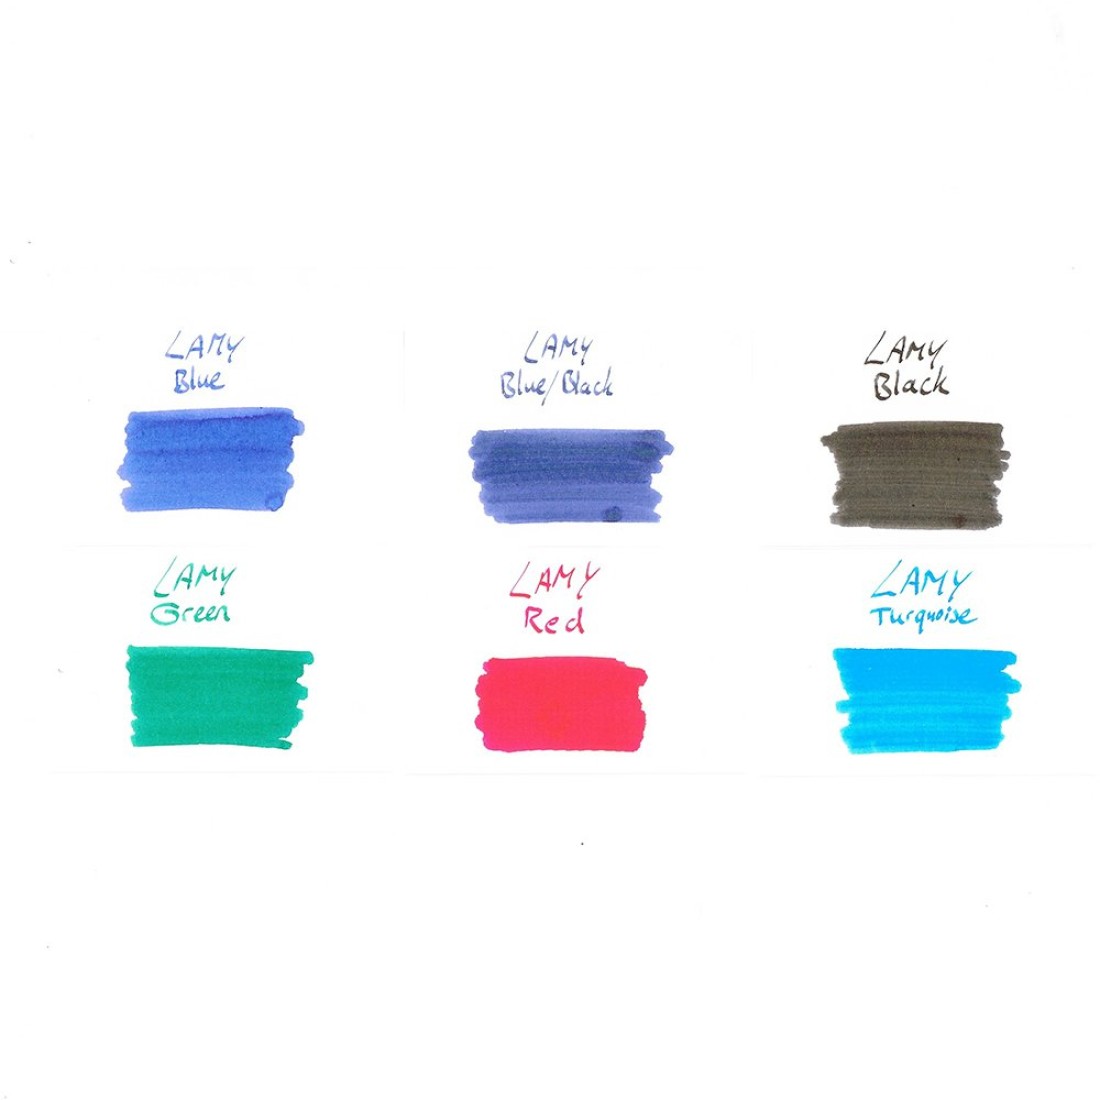 Lamy Ink - Ink Cartridges (7 colors)